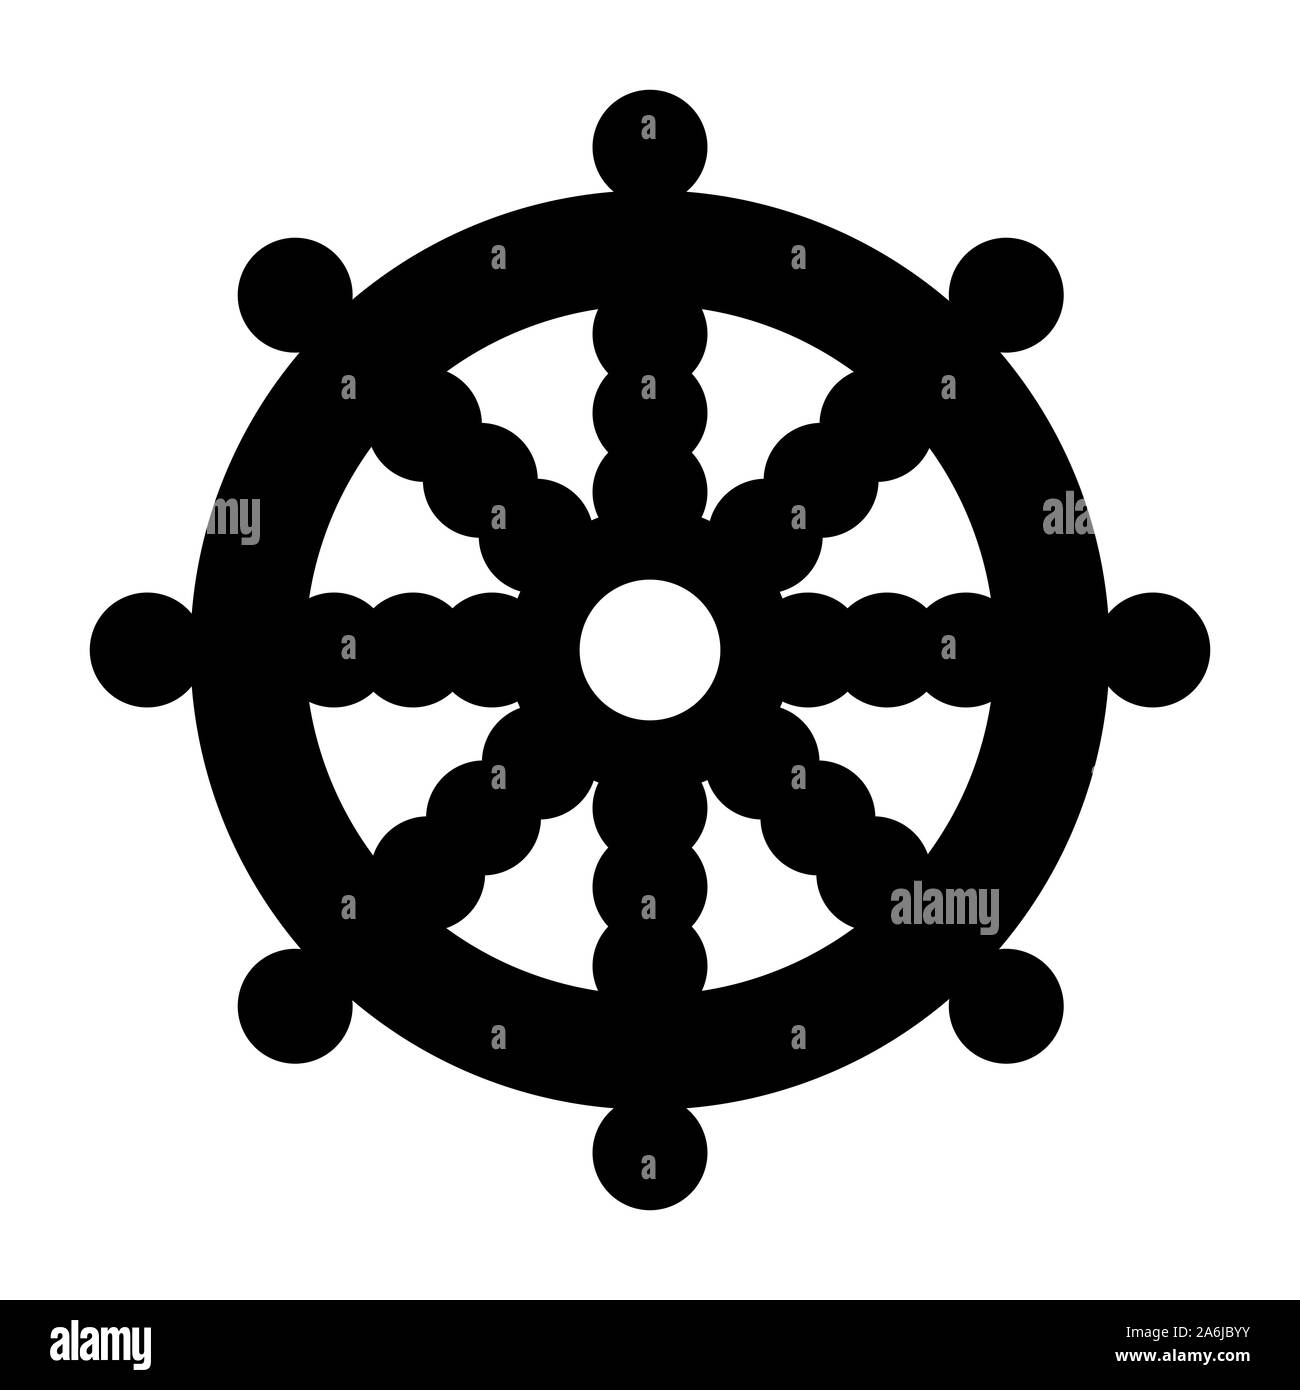 Wheel of Dharma, Dharmachakra symbol Stock Photo